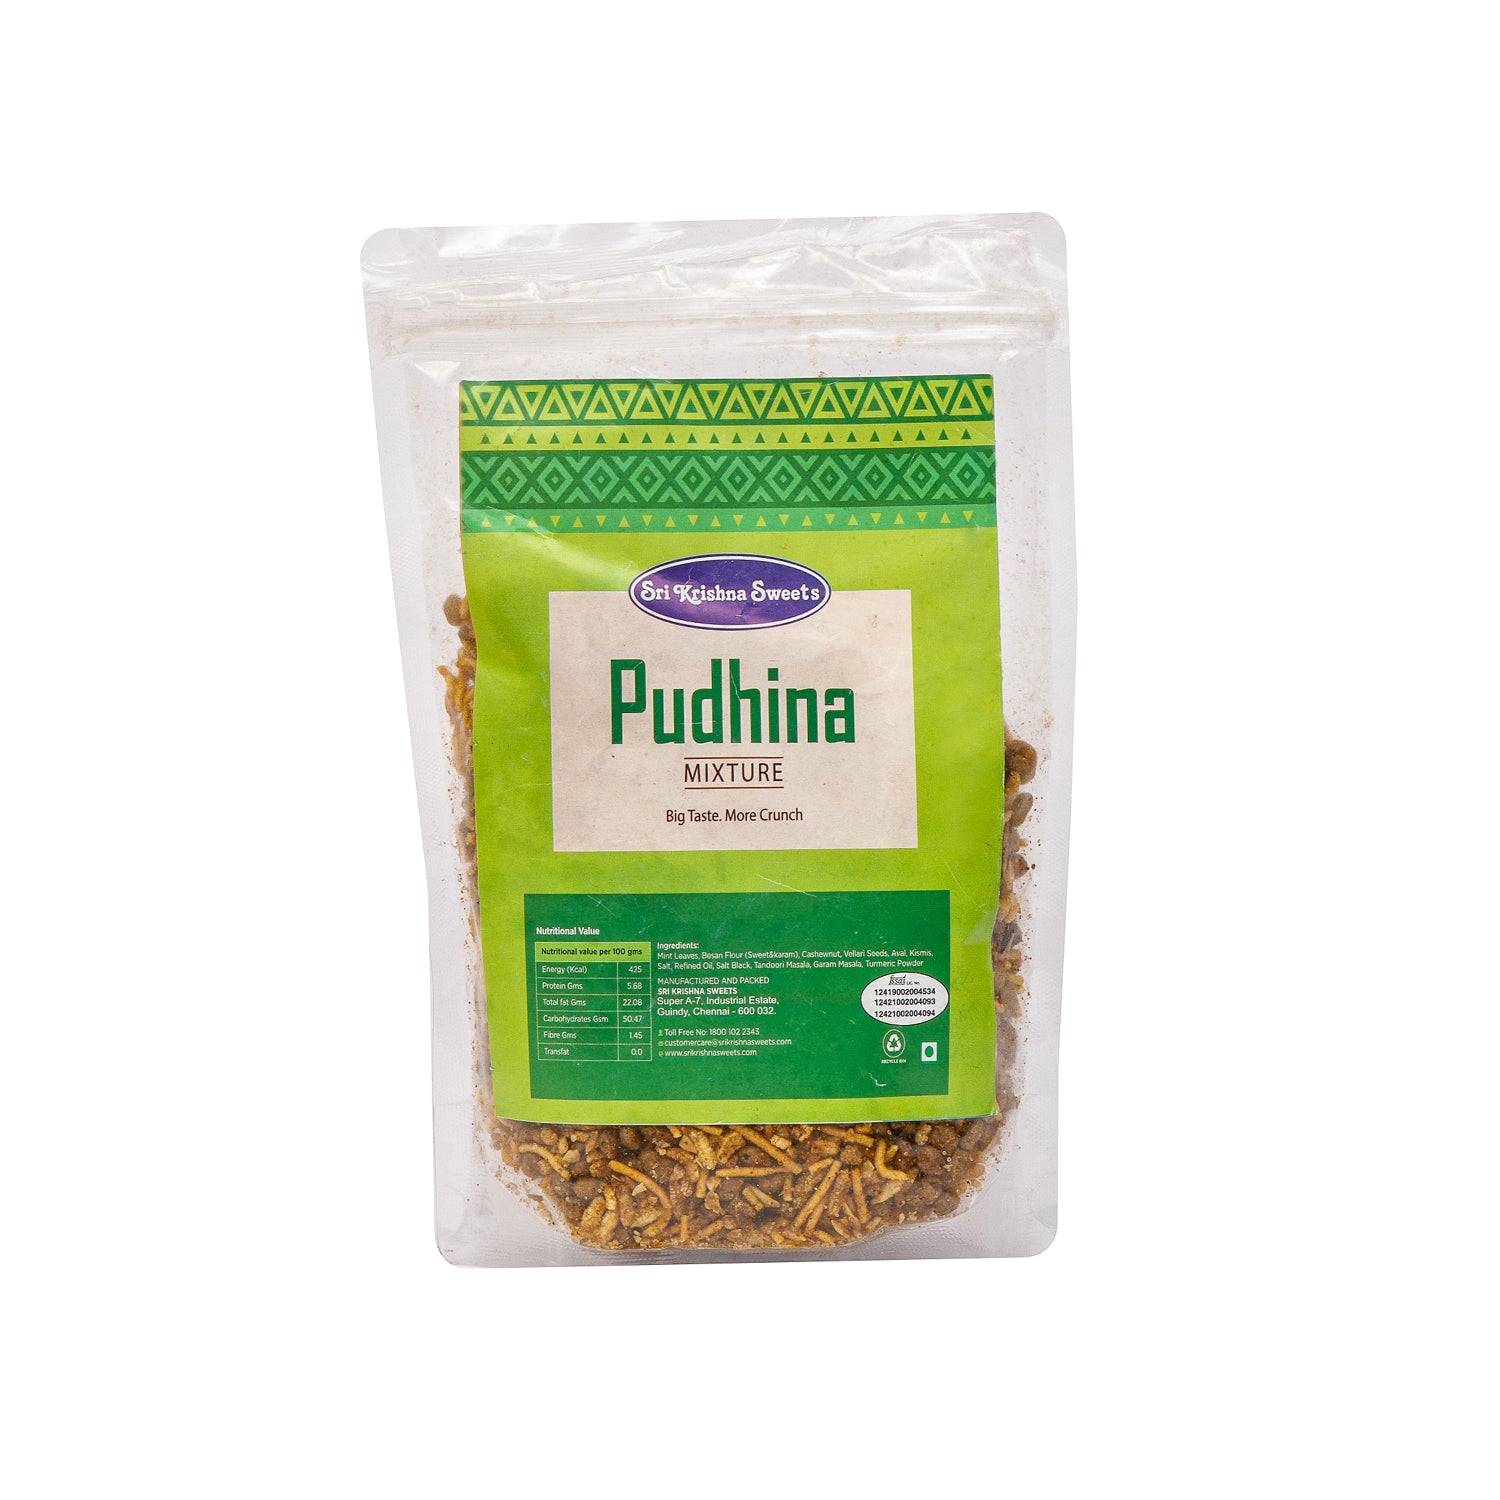 Pudhina Mixture 250gms